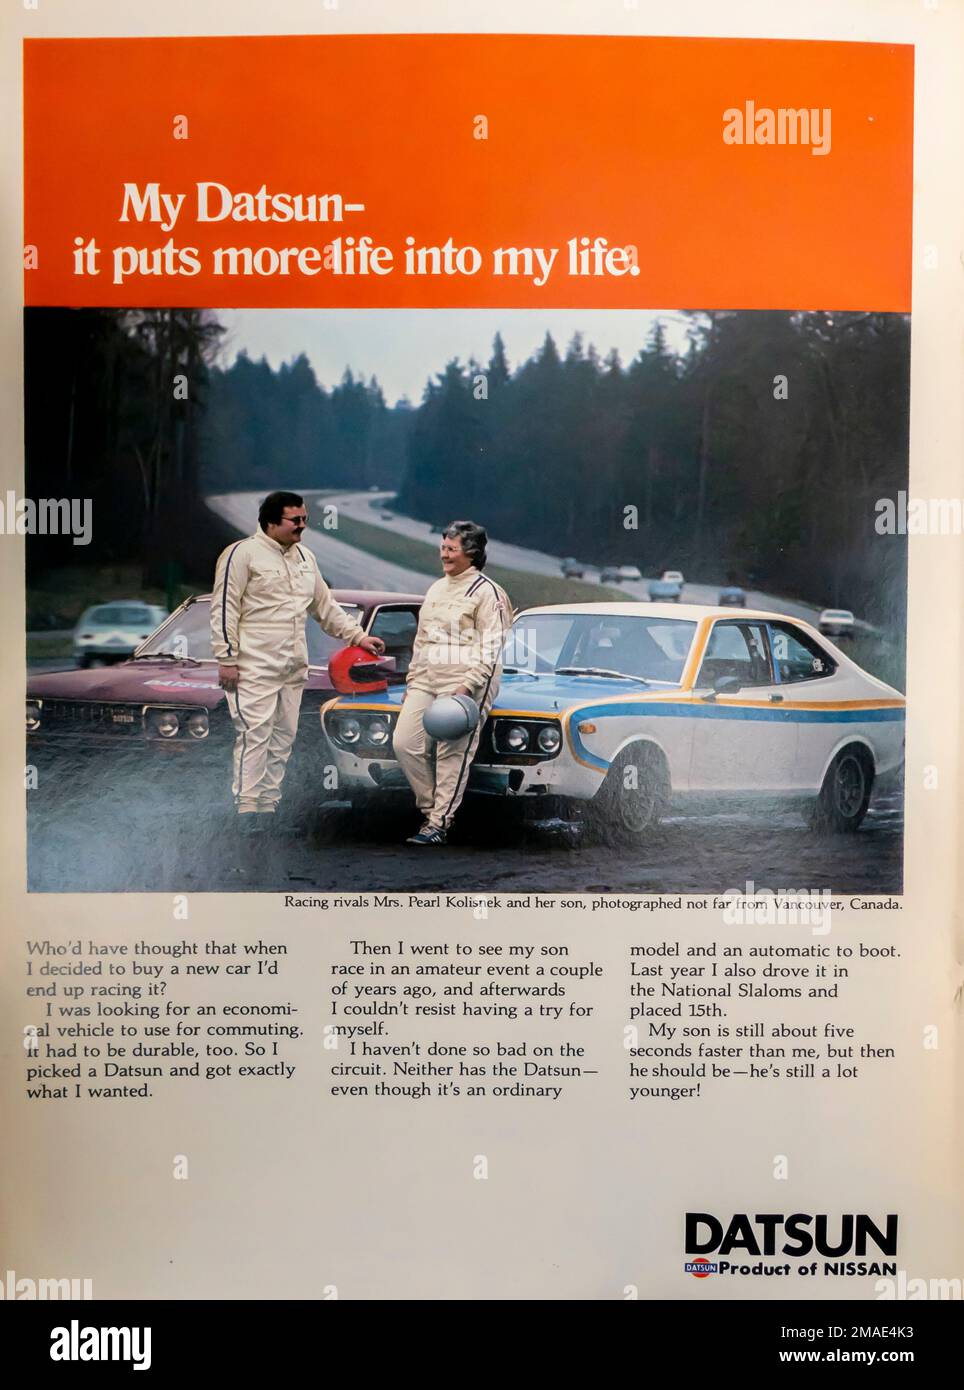 Datsun Nissan car advert in a magazine 1977 Stock Photo